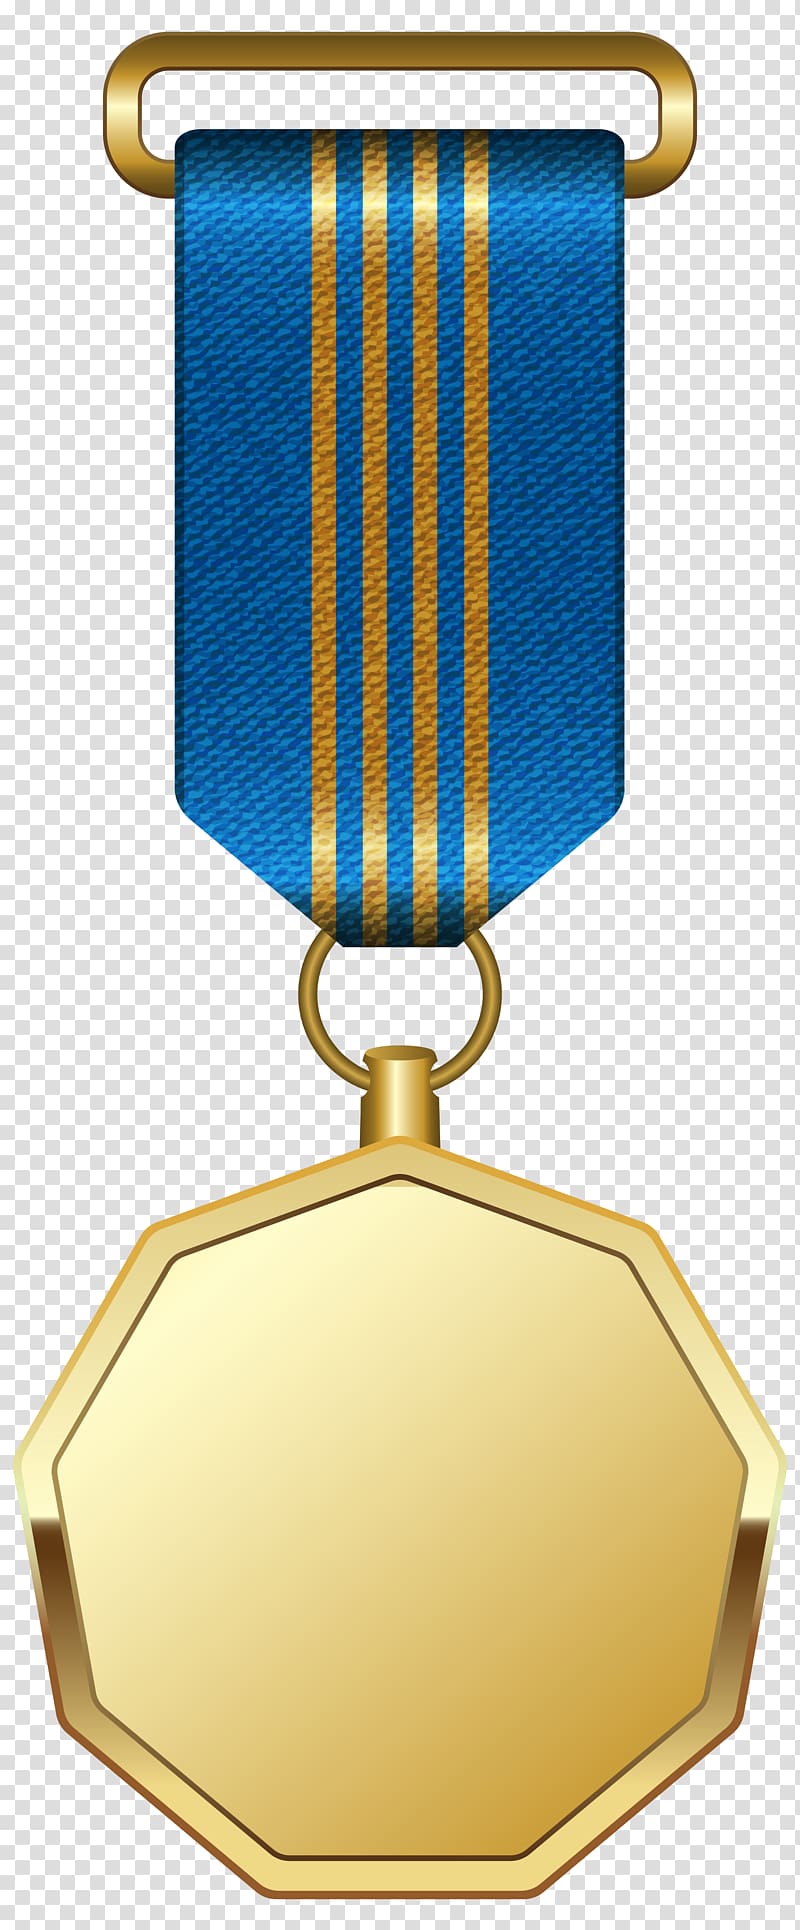 gold-colored medal illustration, Gold medal Award , Gold Medal with Blue Ribbon transparent background PNG clipart